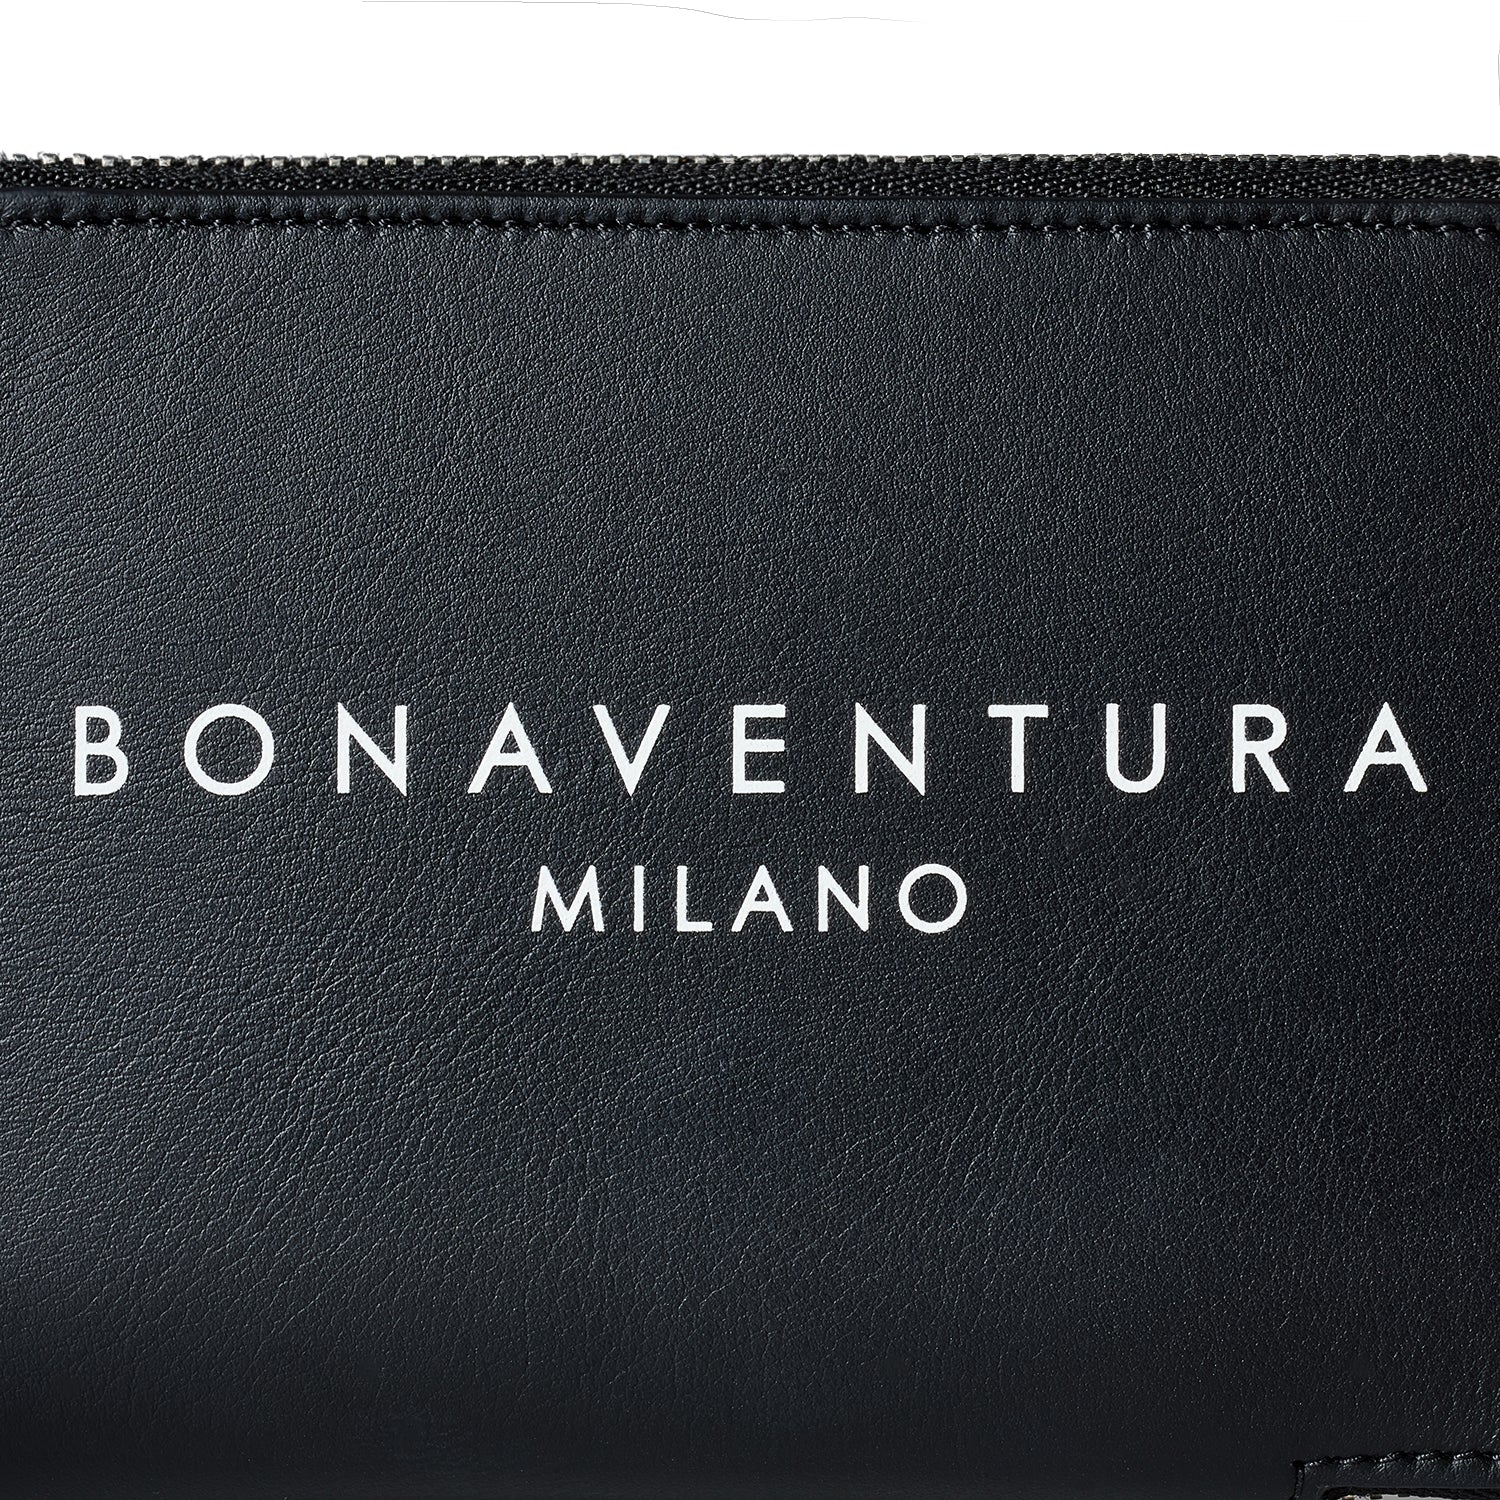 Medium zip wallet in smooth leather